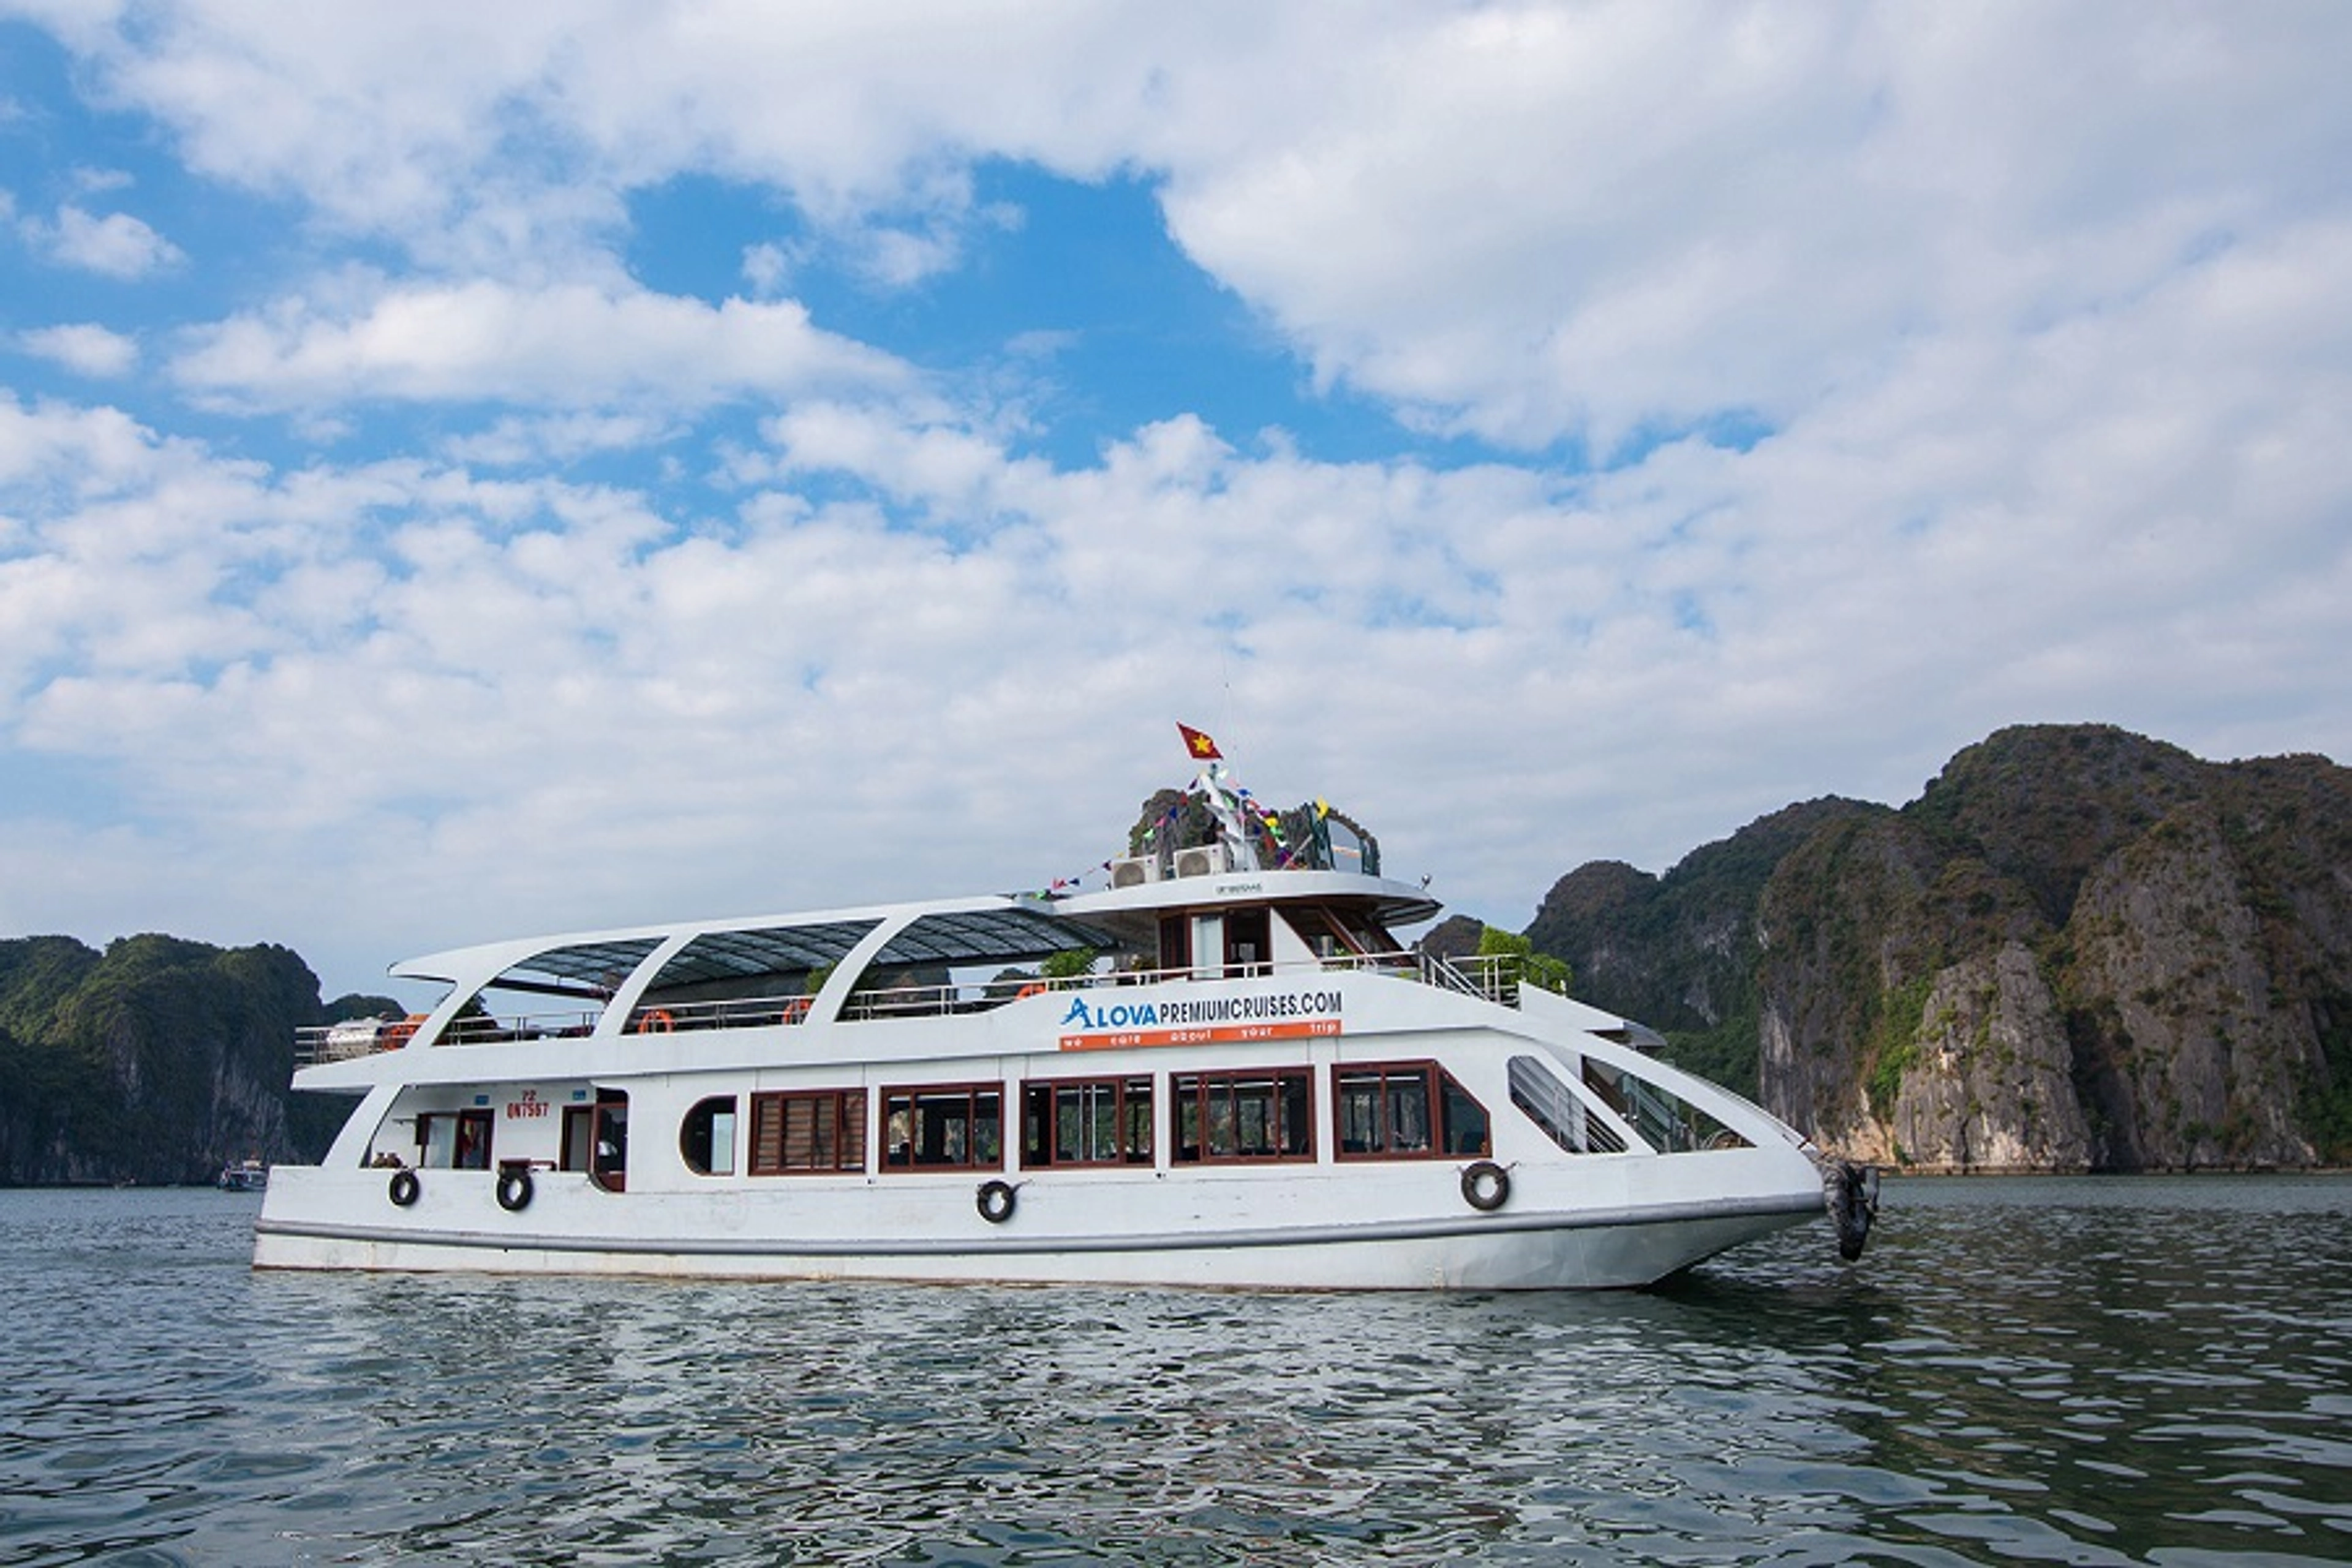 Alova premium cruise - Ha Long Bay one day trip